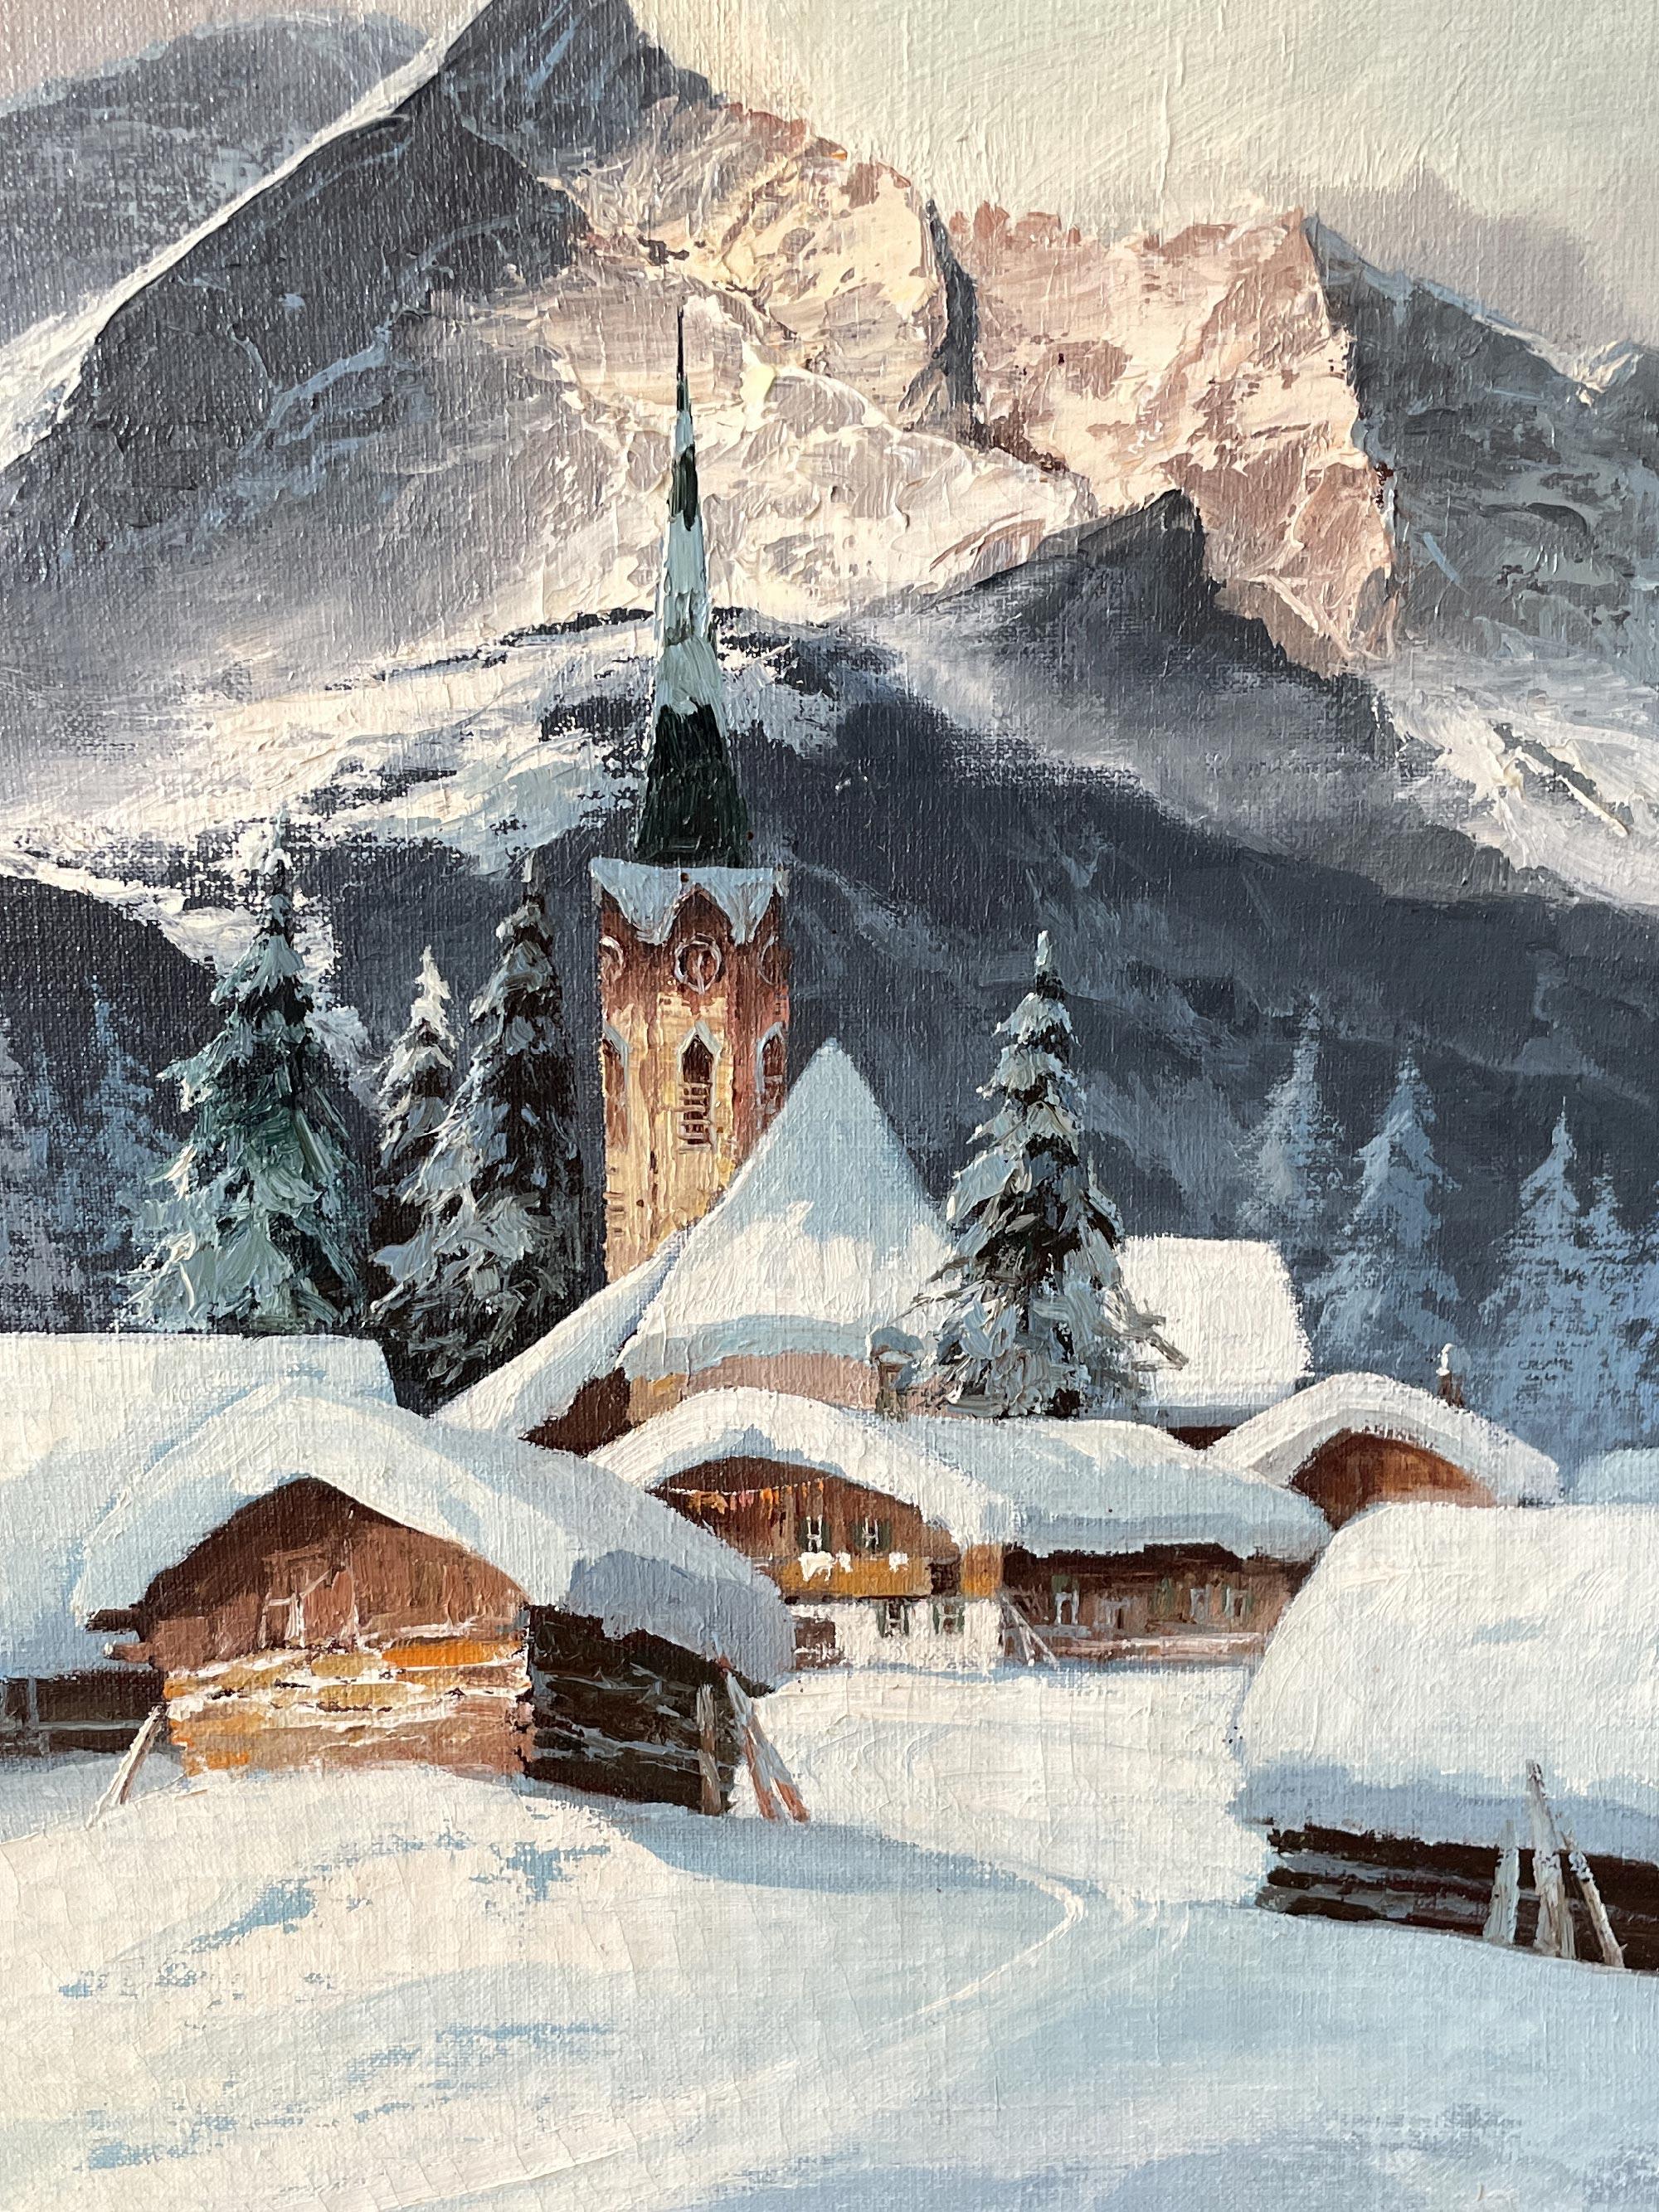 Snowy Landscape by Arno Lemke Oil on Canvas, 1950 5